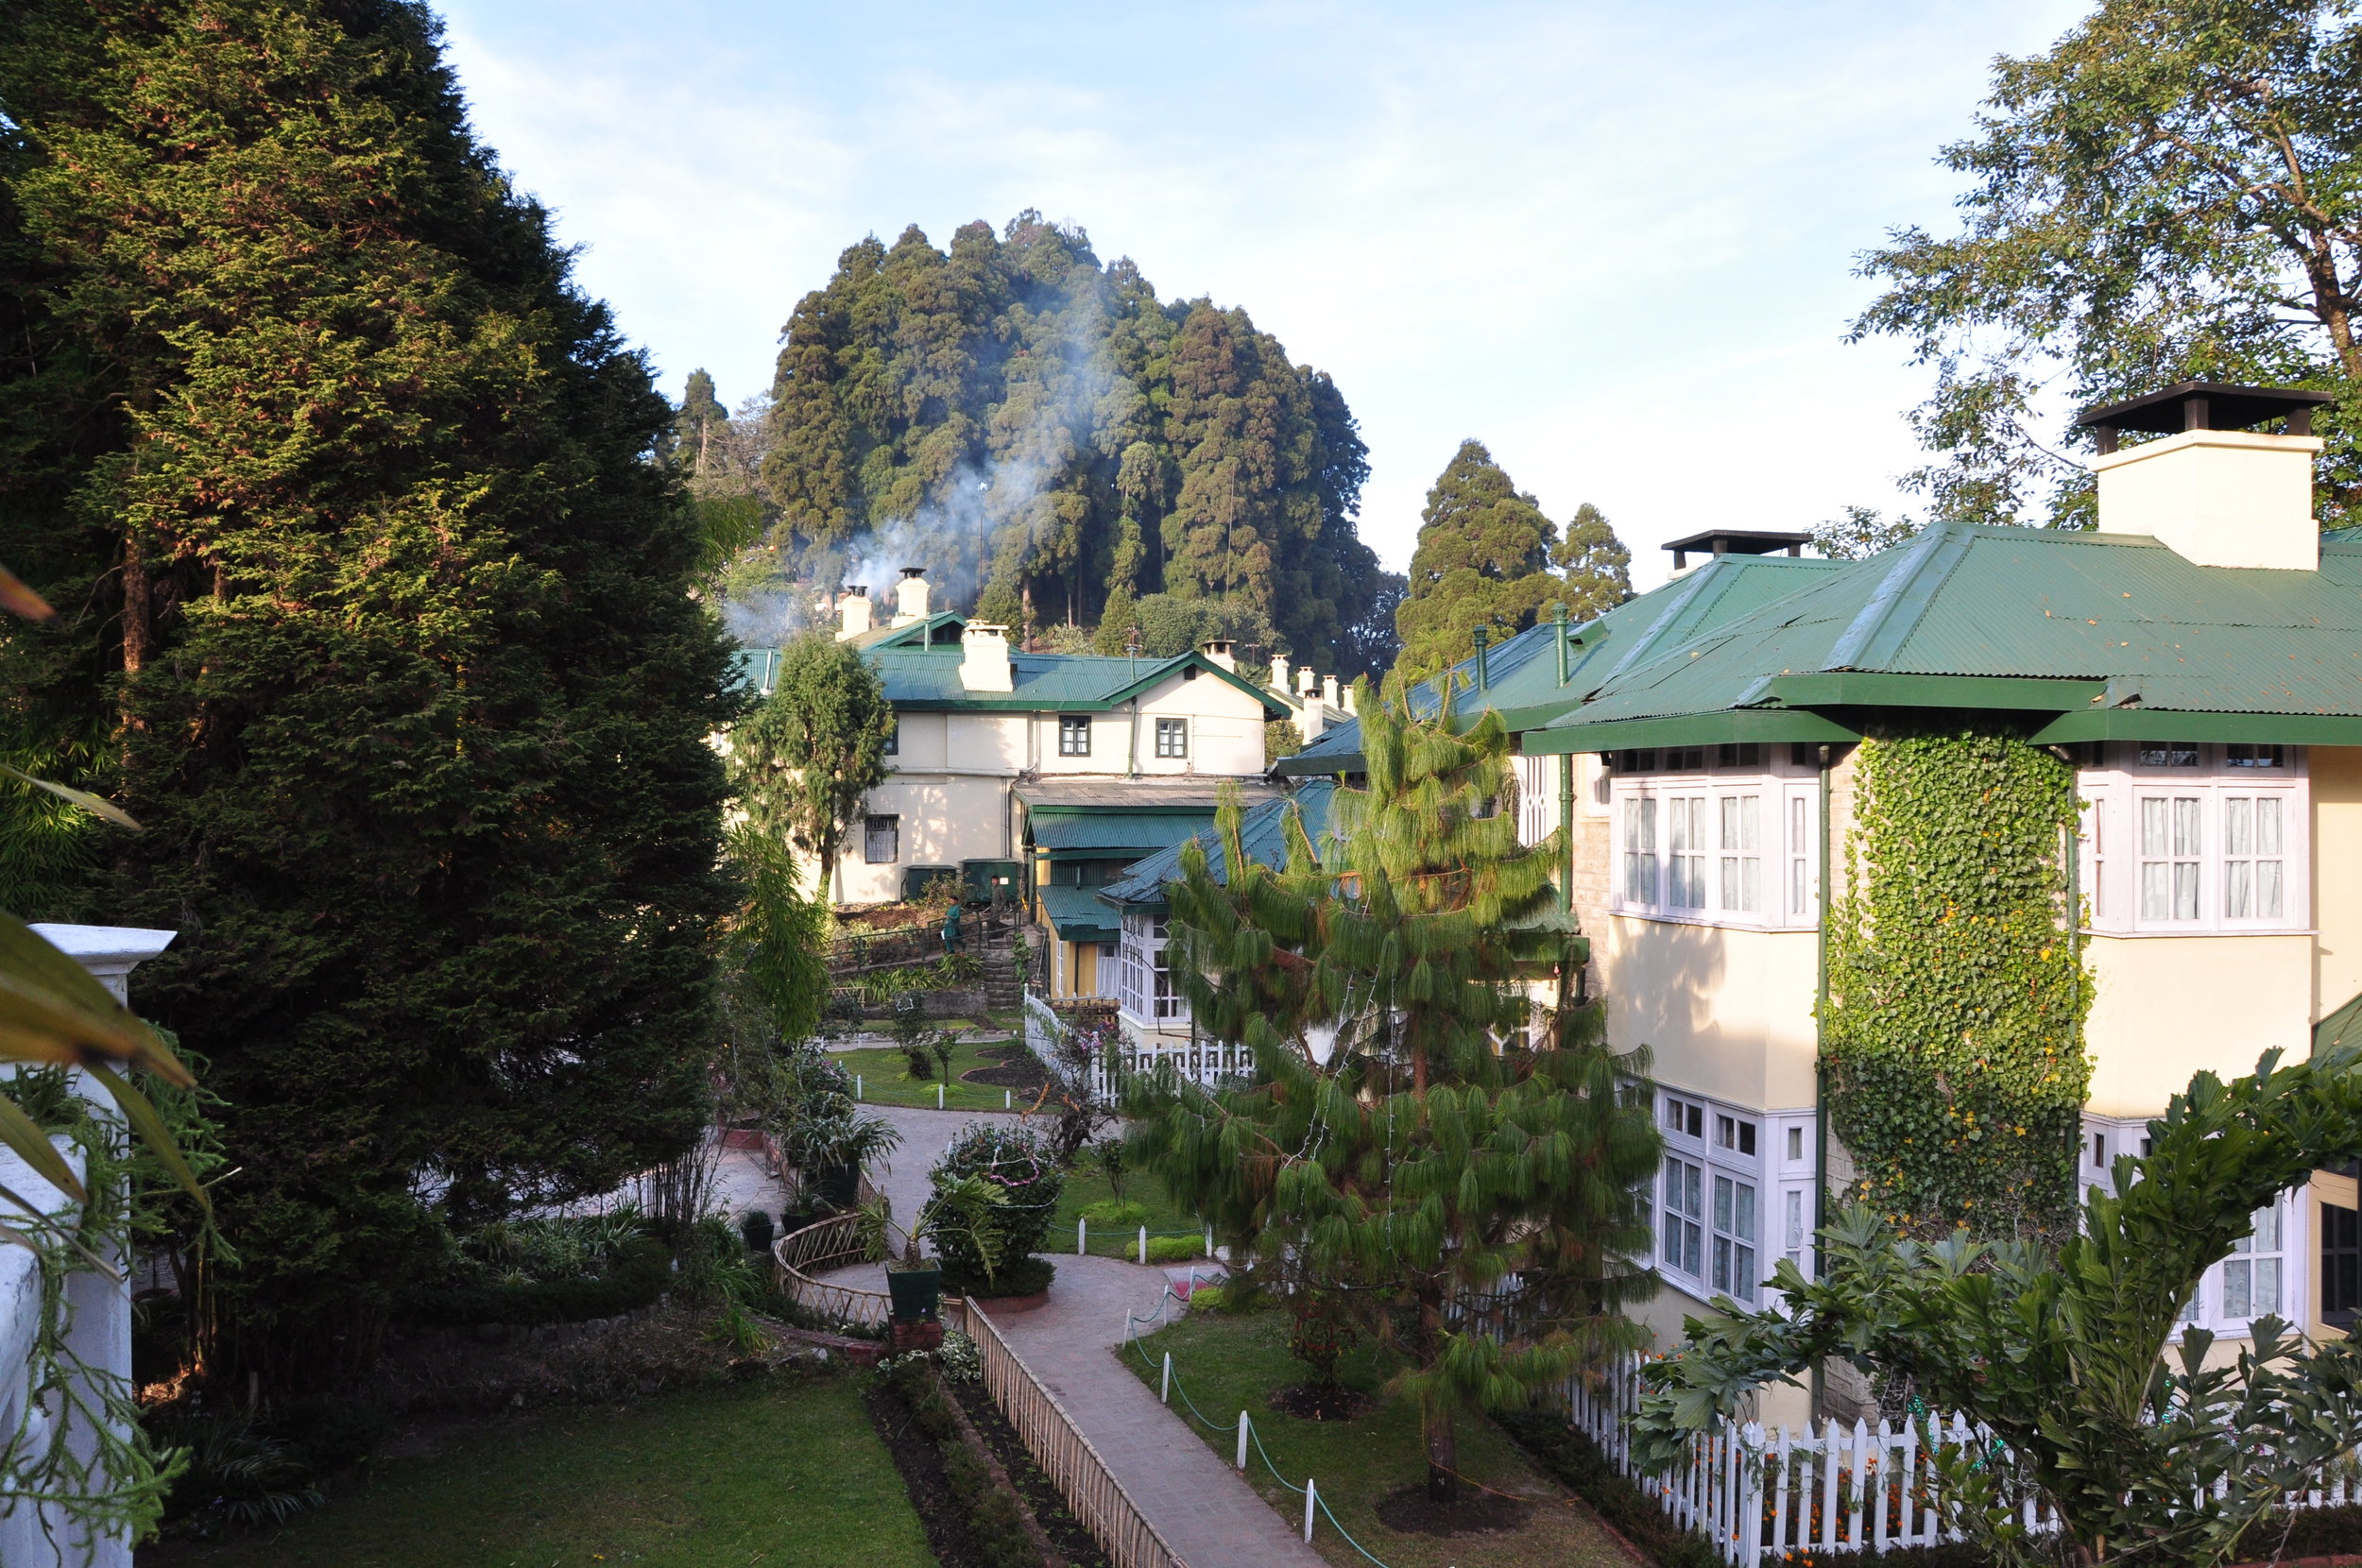  Windamere Hotel - Darjeeling 